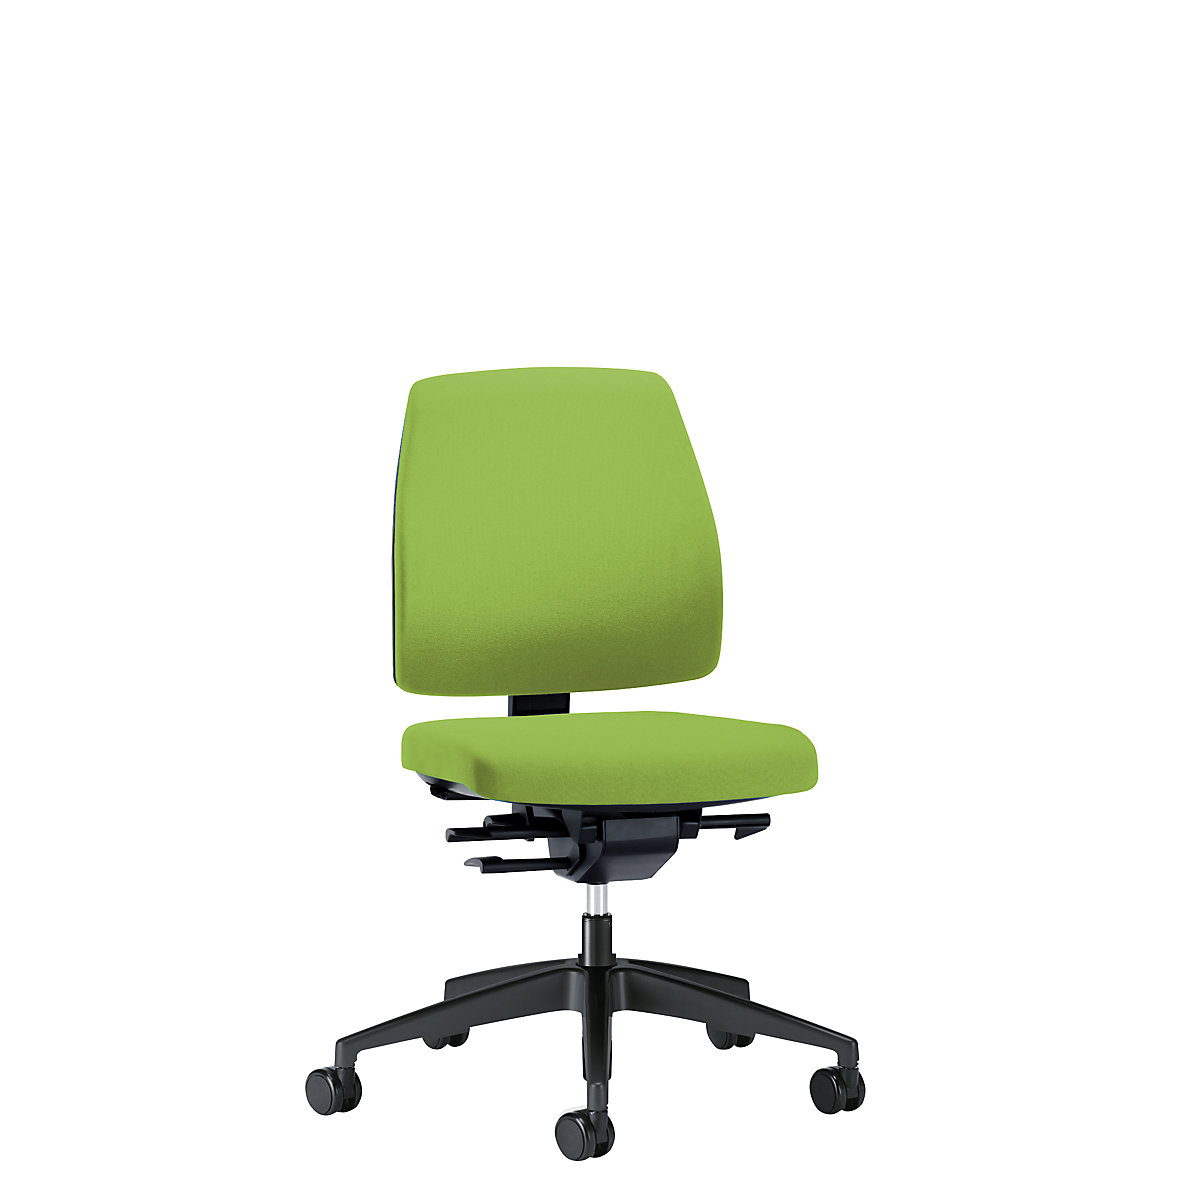 GOAL office swivel chair, back rest height 430 mm – interstuhl, black frame, with hard castors, yellow green, seat depth 410 mm-4